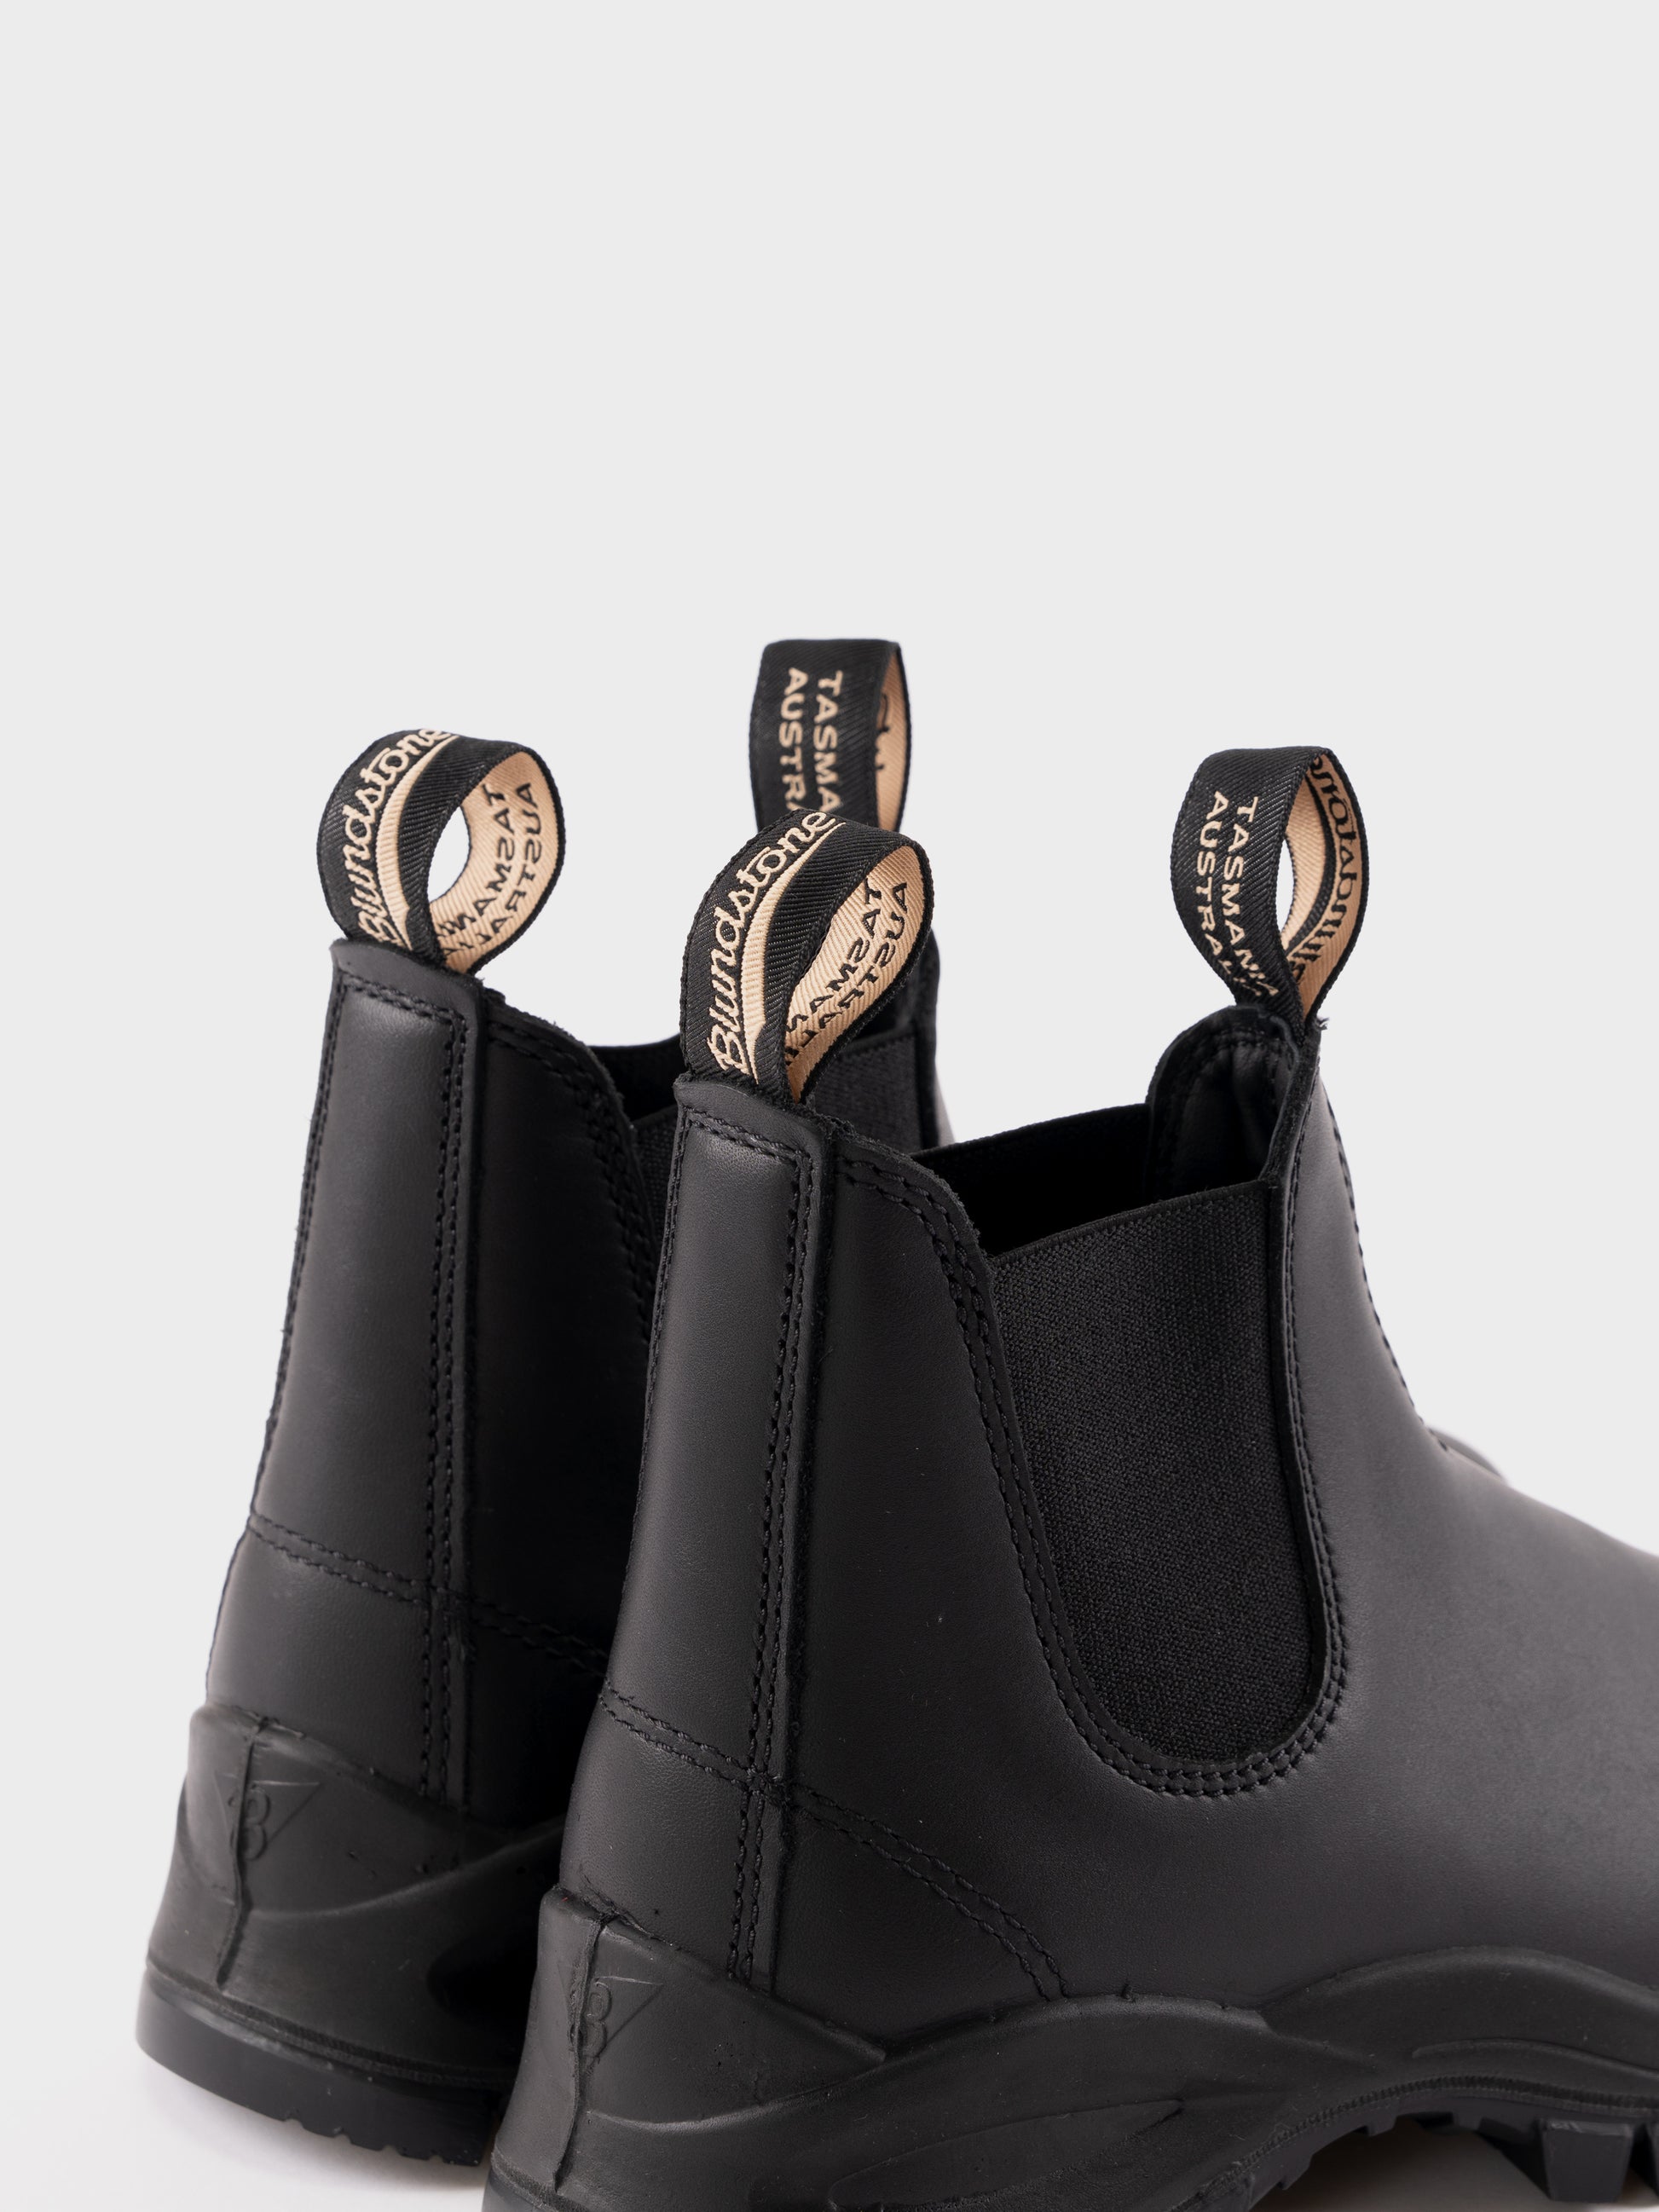 Blundstone Lug Boots - 2240 - Black Leather